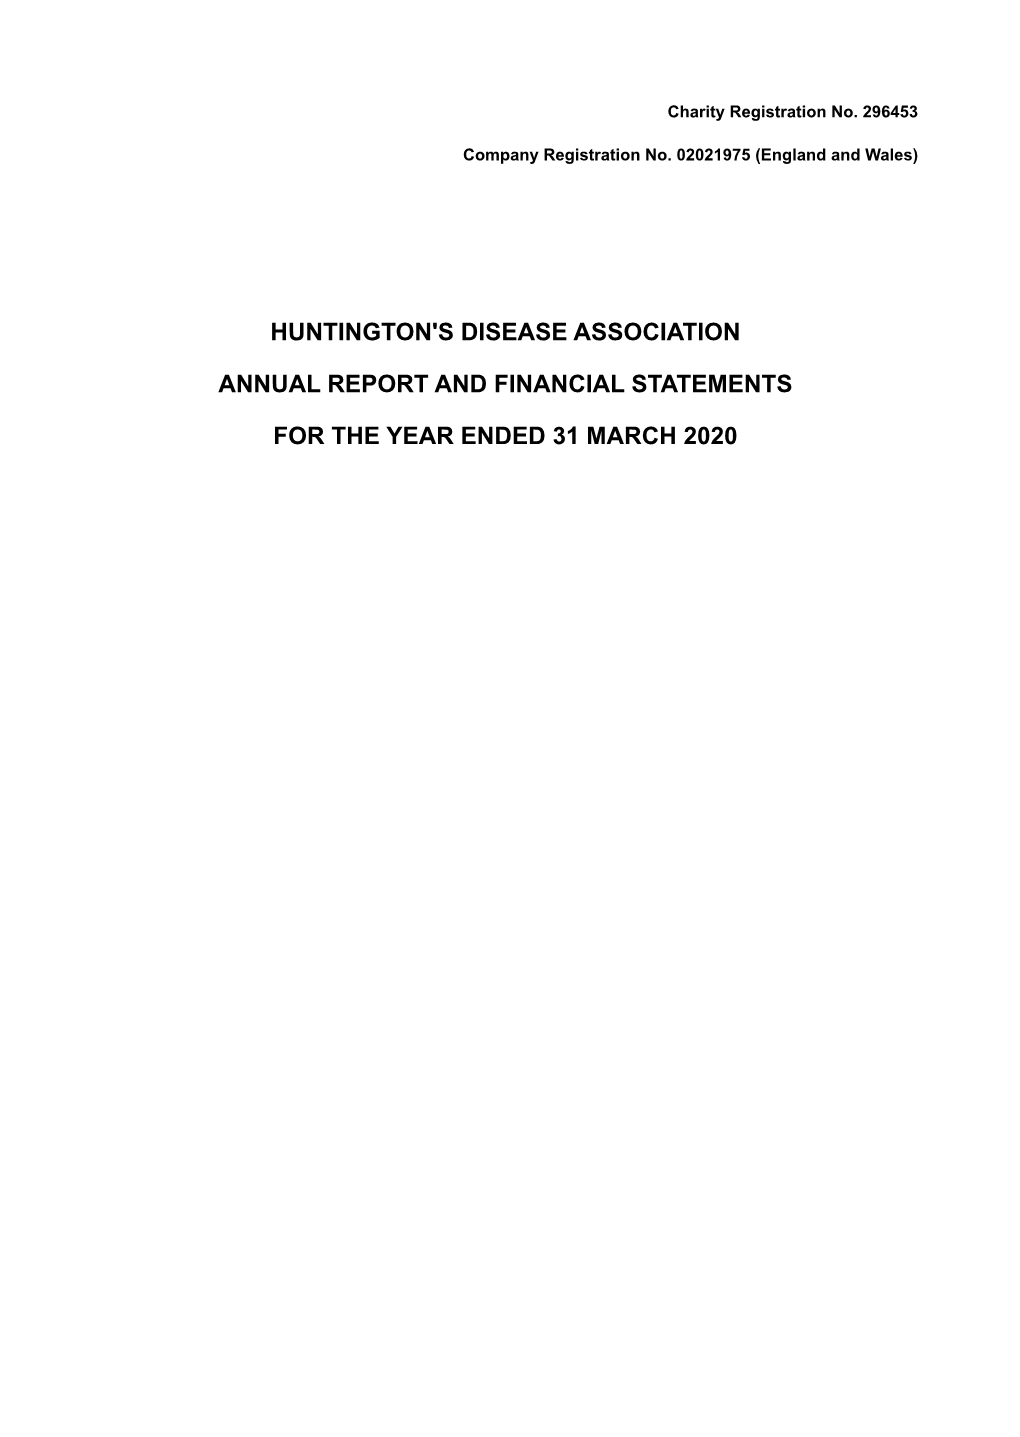 Huntington's Disease Association Annual Report